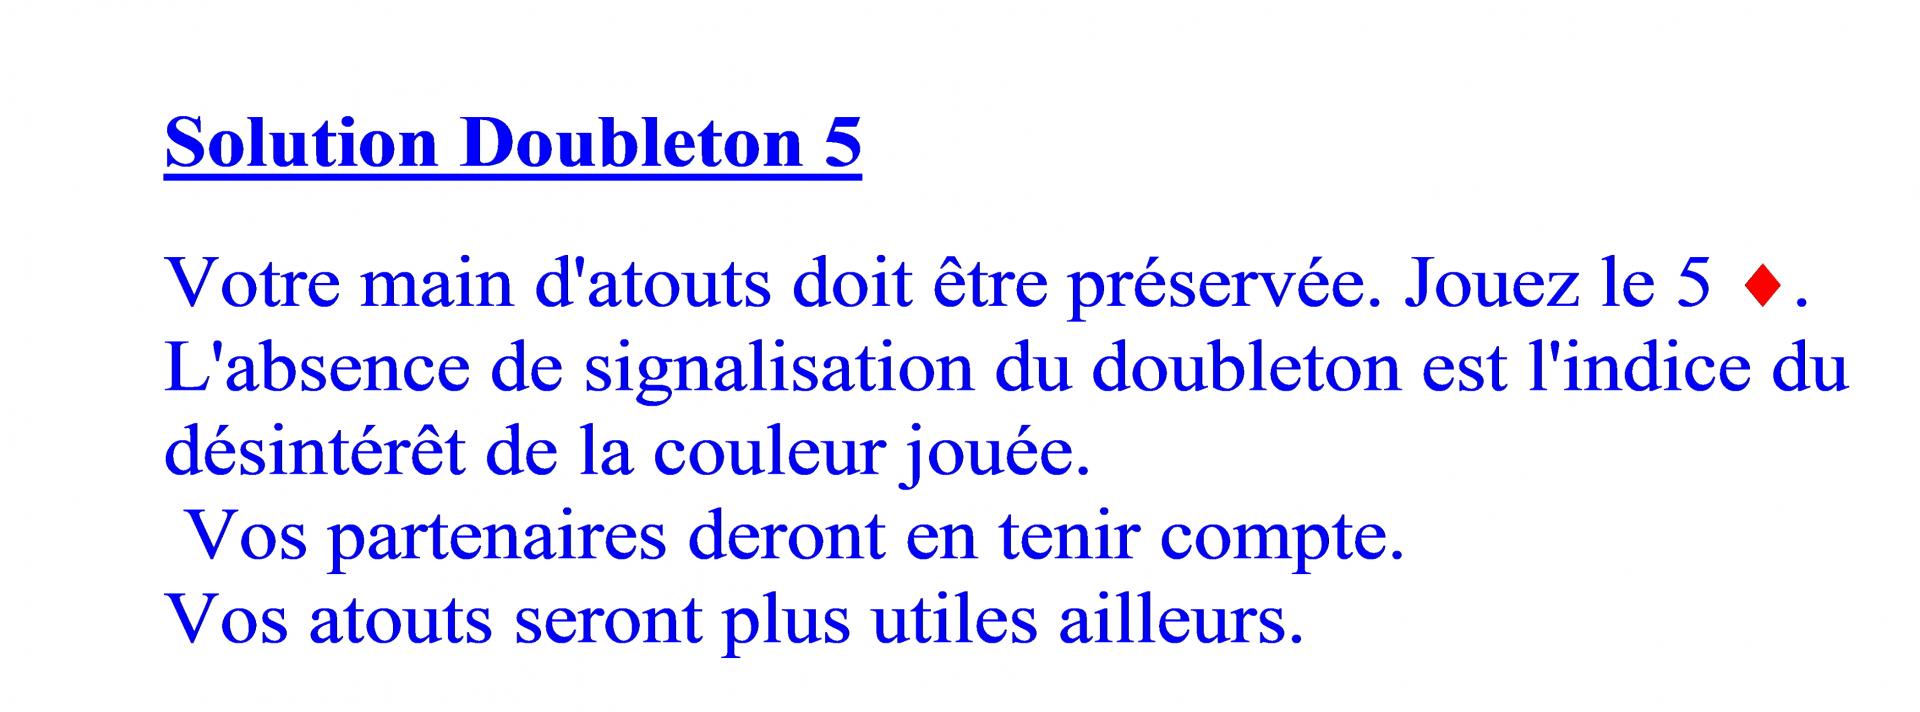 Doubleton 5 r